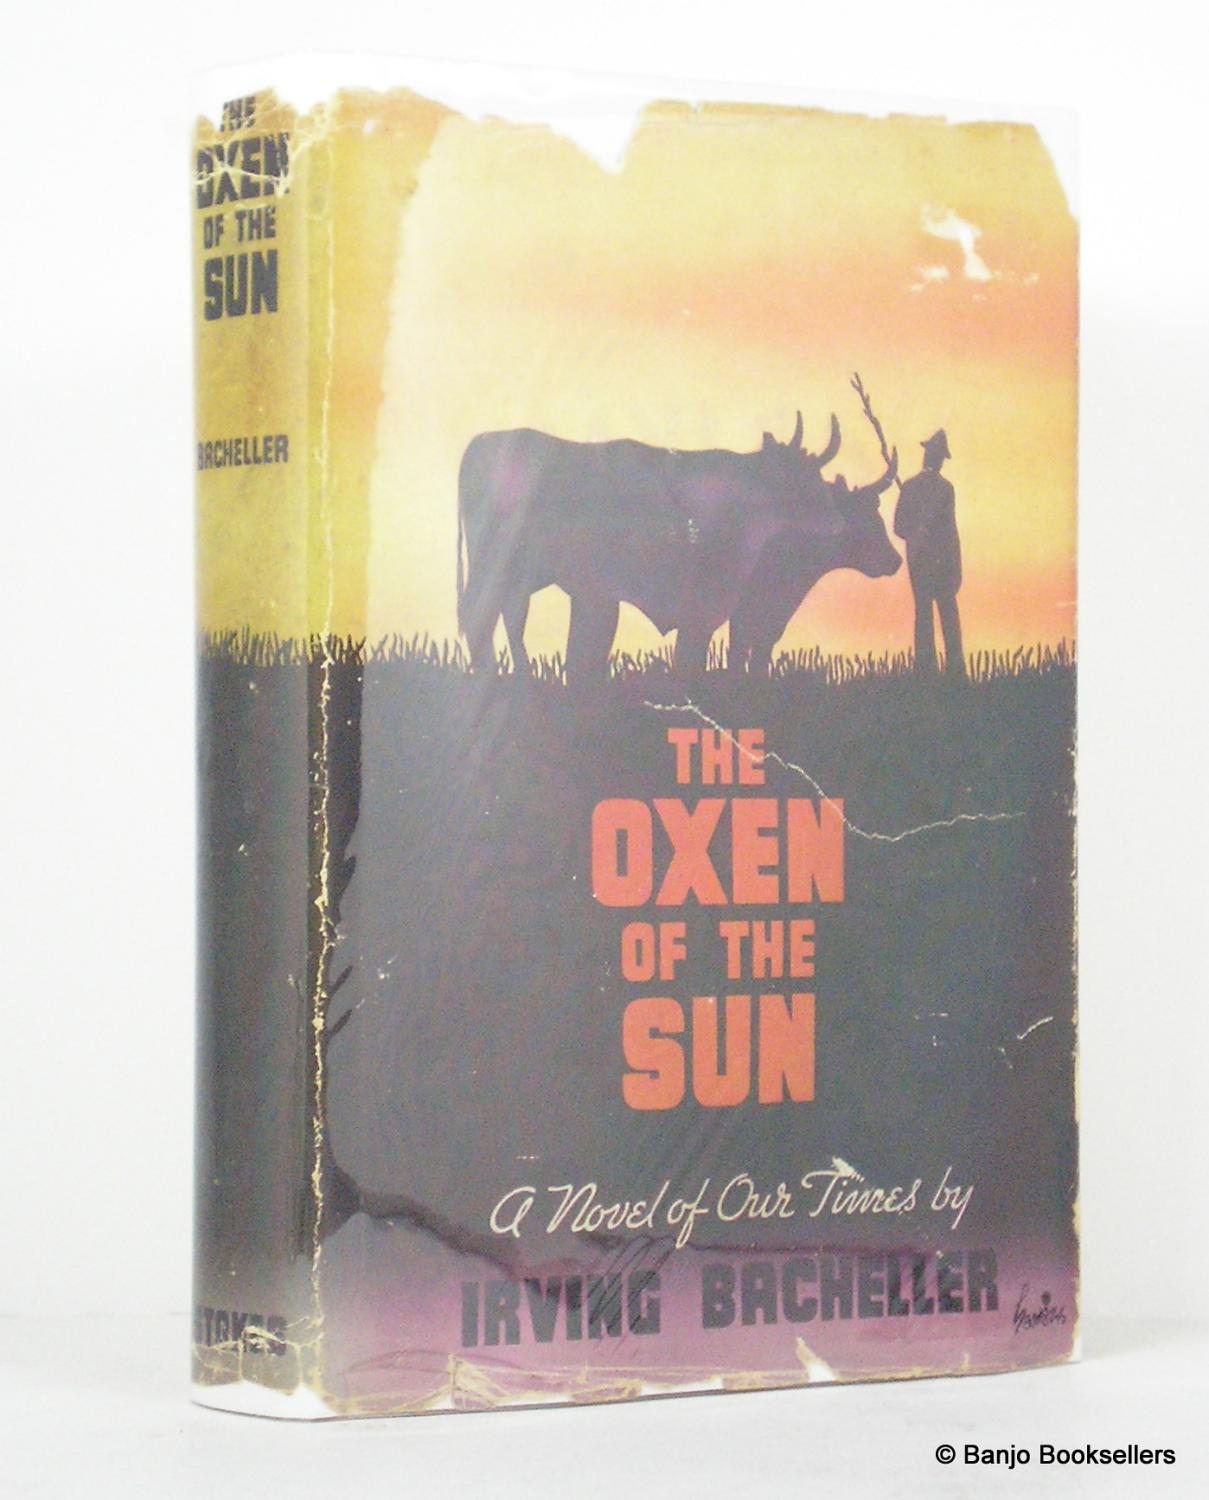 Aeródromo hoy simultáneo The Oxen of the Sun: A Novel of Our Times de Bacheller, Irving: Very Good  Hard Cover (1935) First Edition. | Banjo Booksellers, IOBA